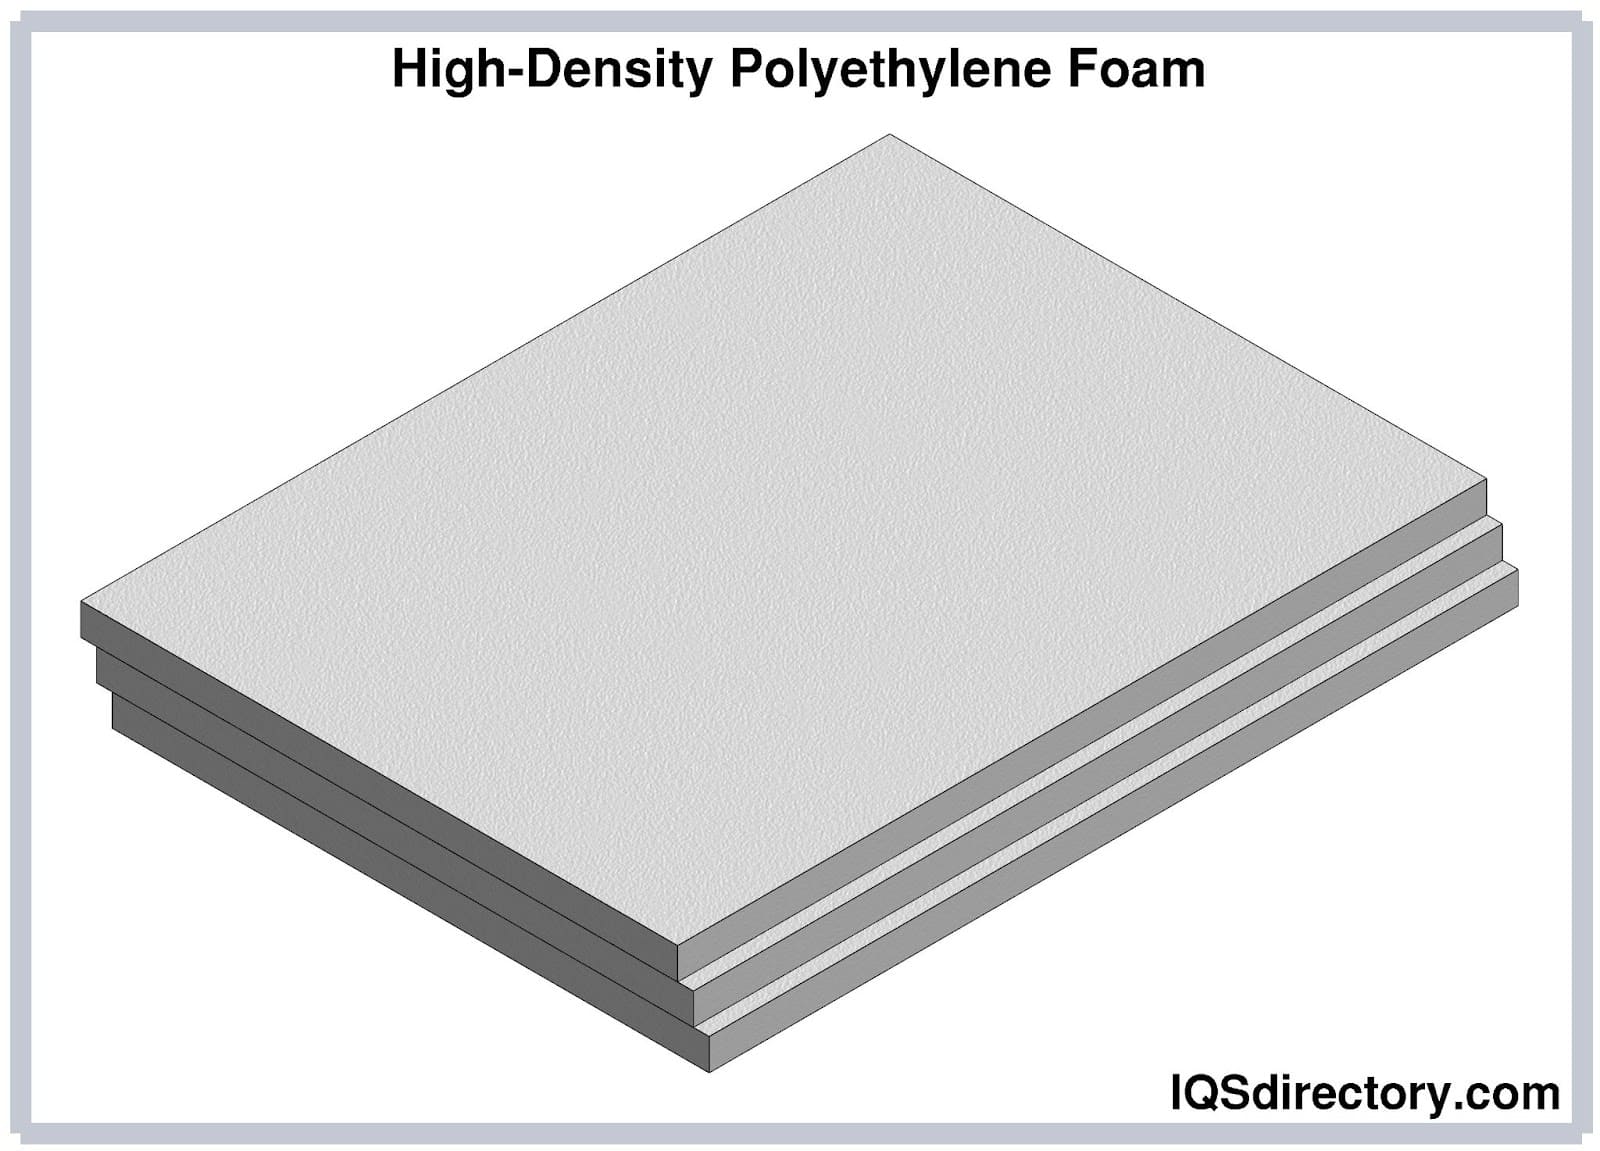 High-Density Polyethylene Foam